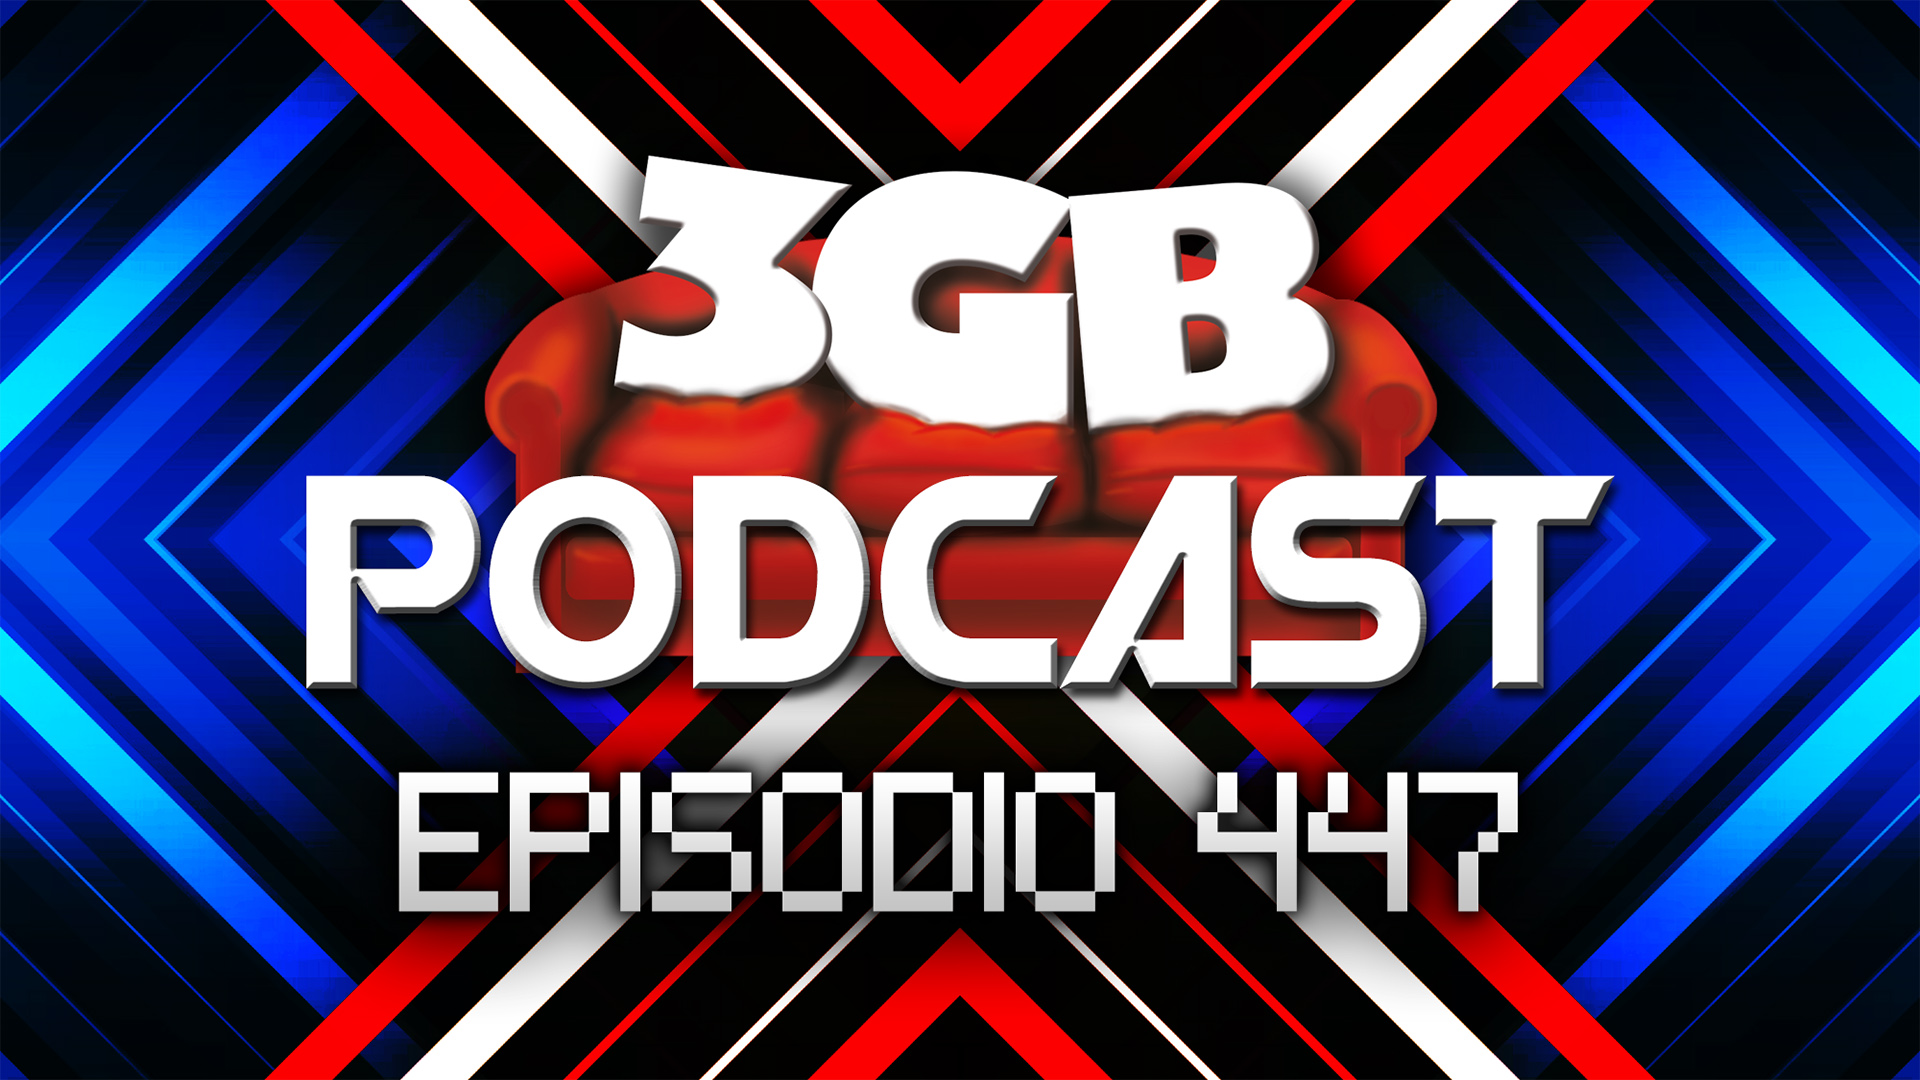 Podcast: Episodio 447, Influir Responsablemente